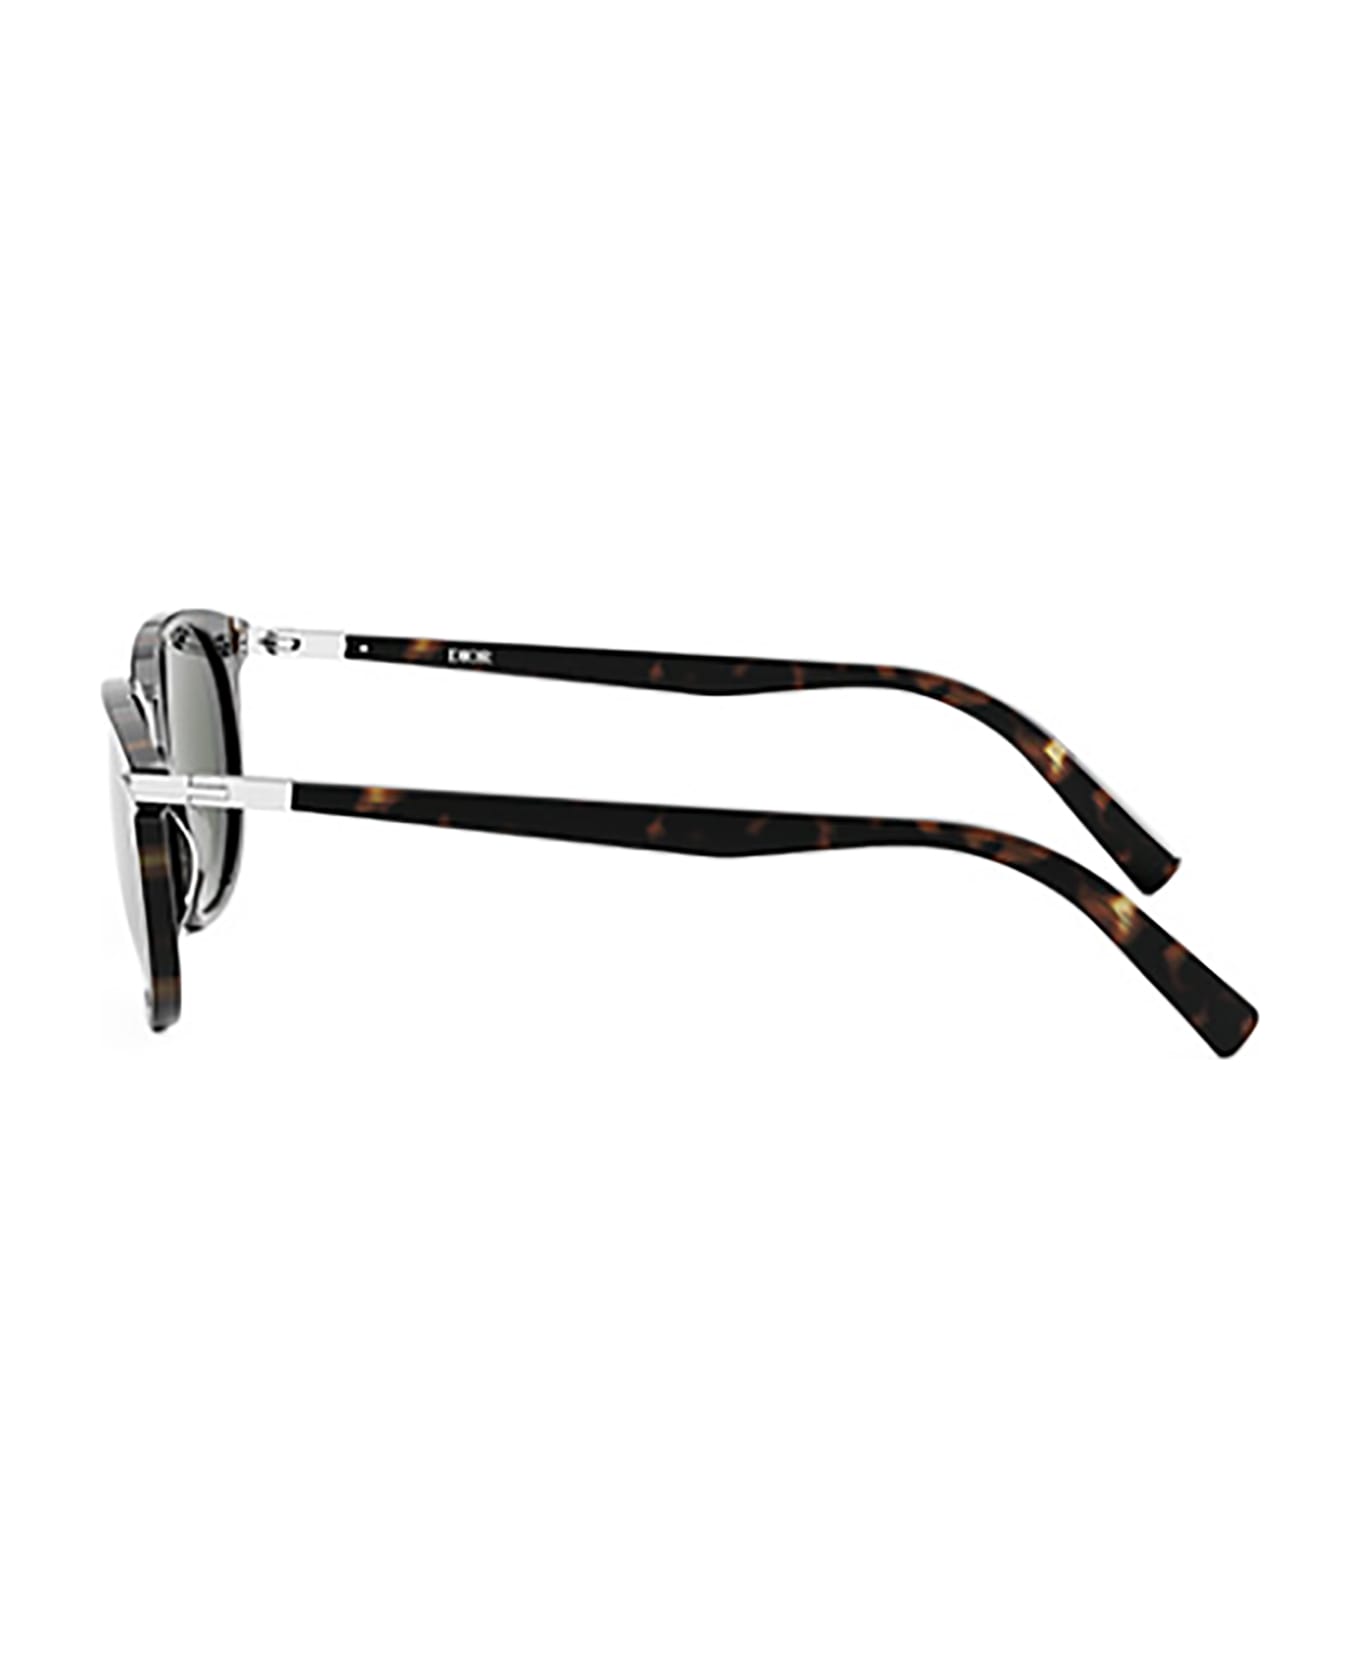 Dior BLACKSUIT S12I Sunglasses サングラス